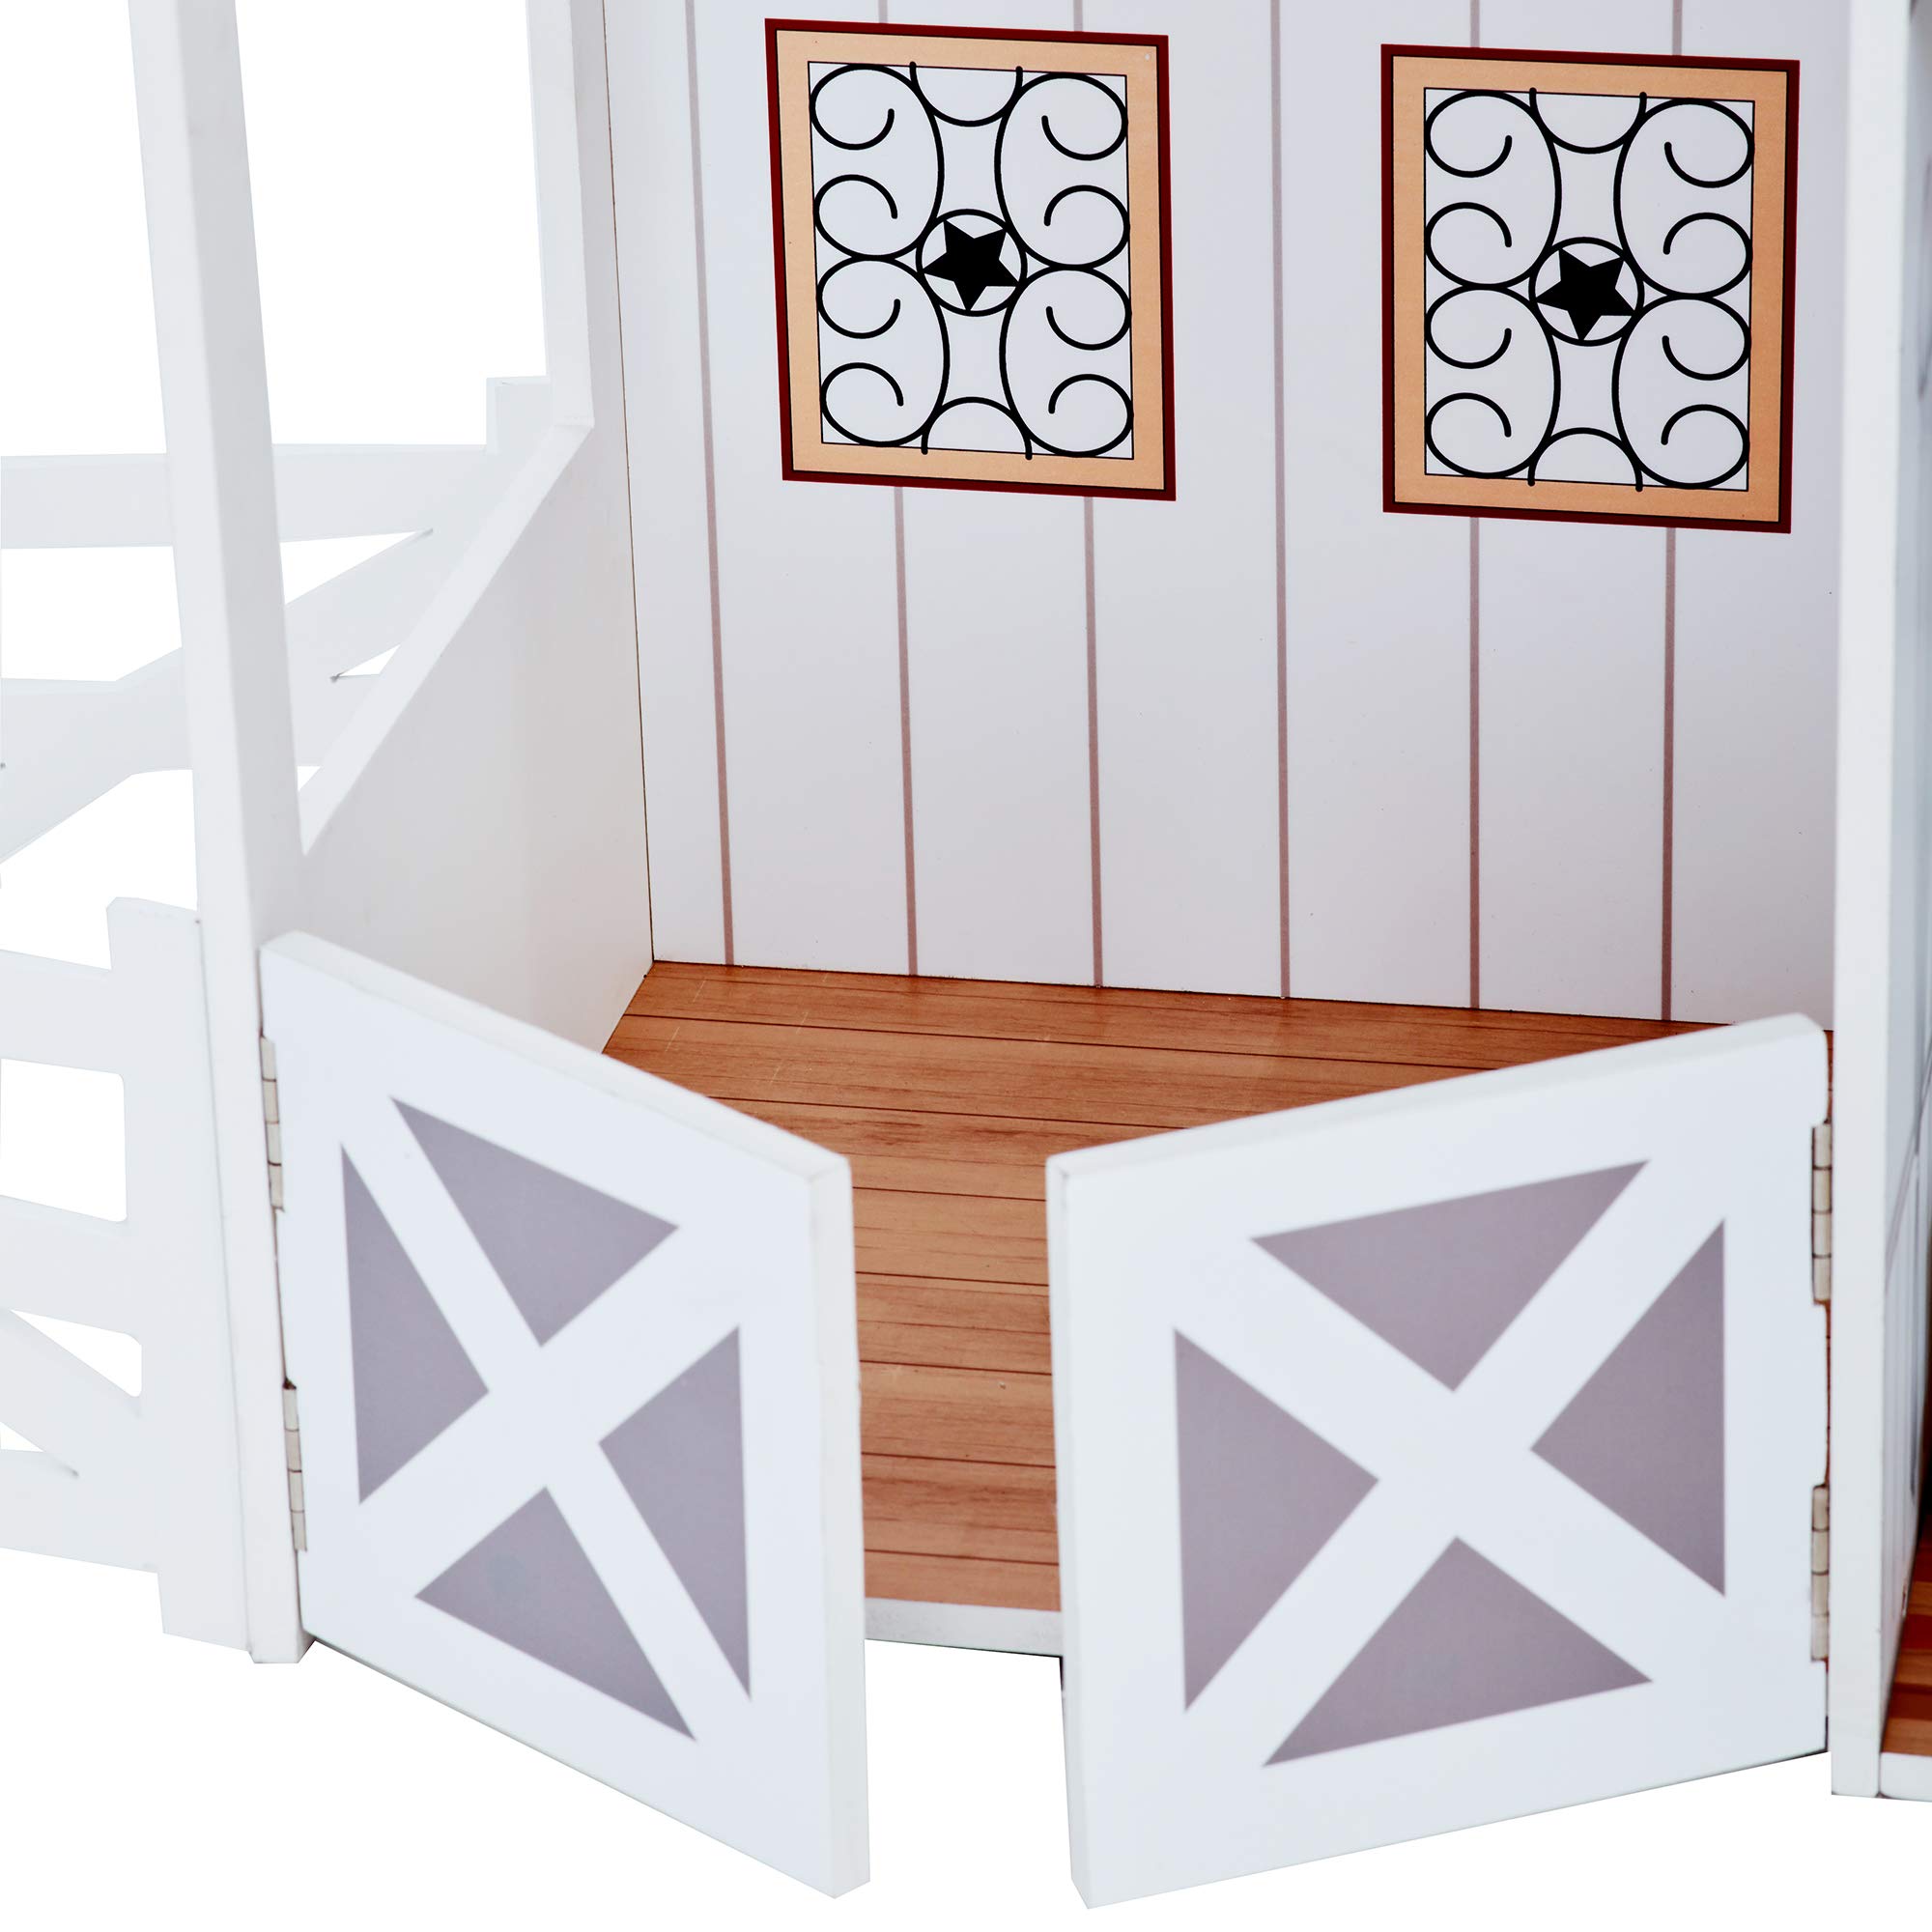 Teamson Kids - Dreamland Farm House Wooden Pretend Play Doll House Dollhouse For 12